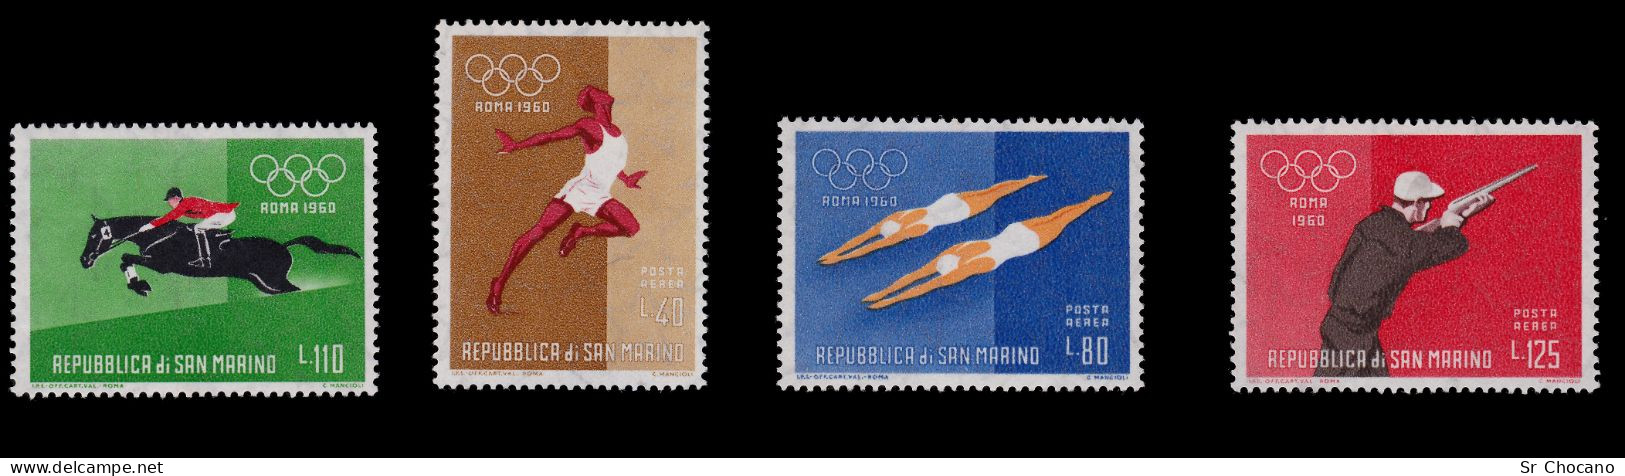 SAN MARINO STAMPS.1960.17th Olympic Games Rome.SCOTT 456-465,C111-C114.MNH. - Nuovi